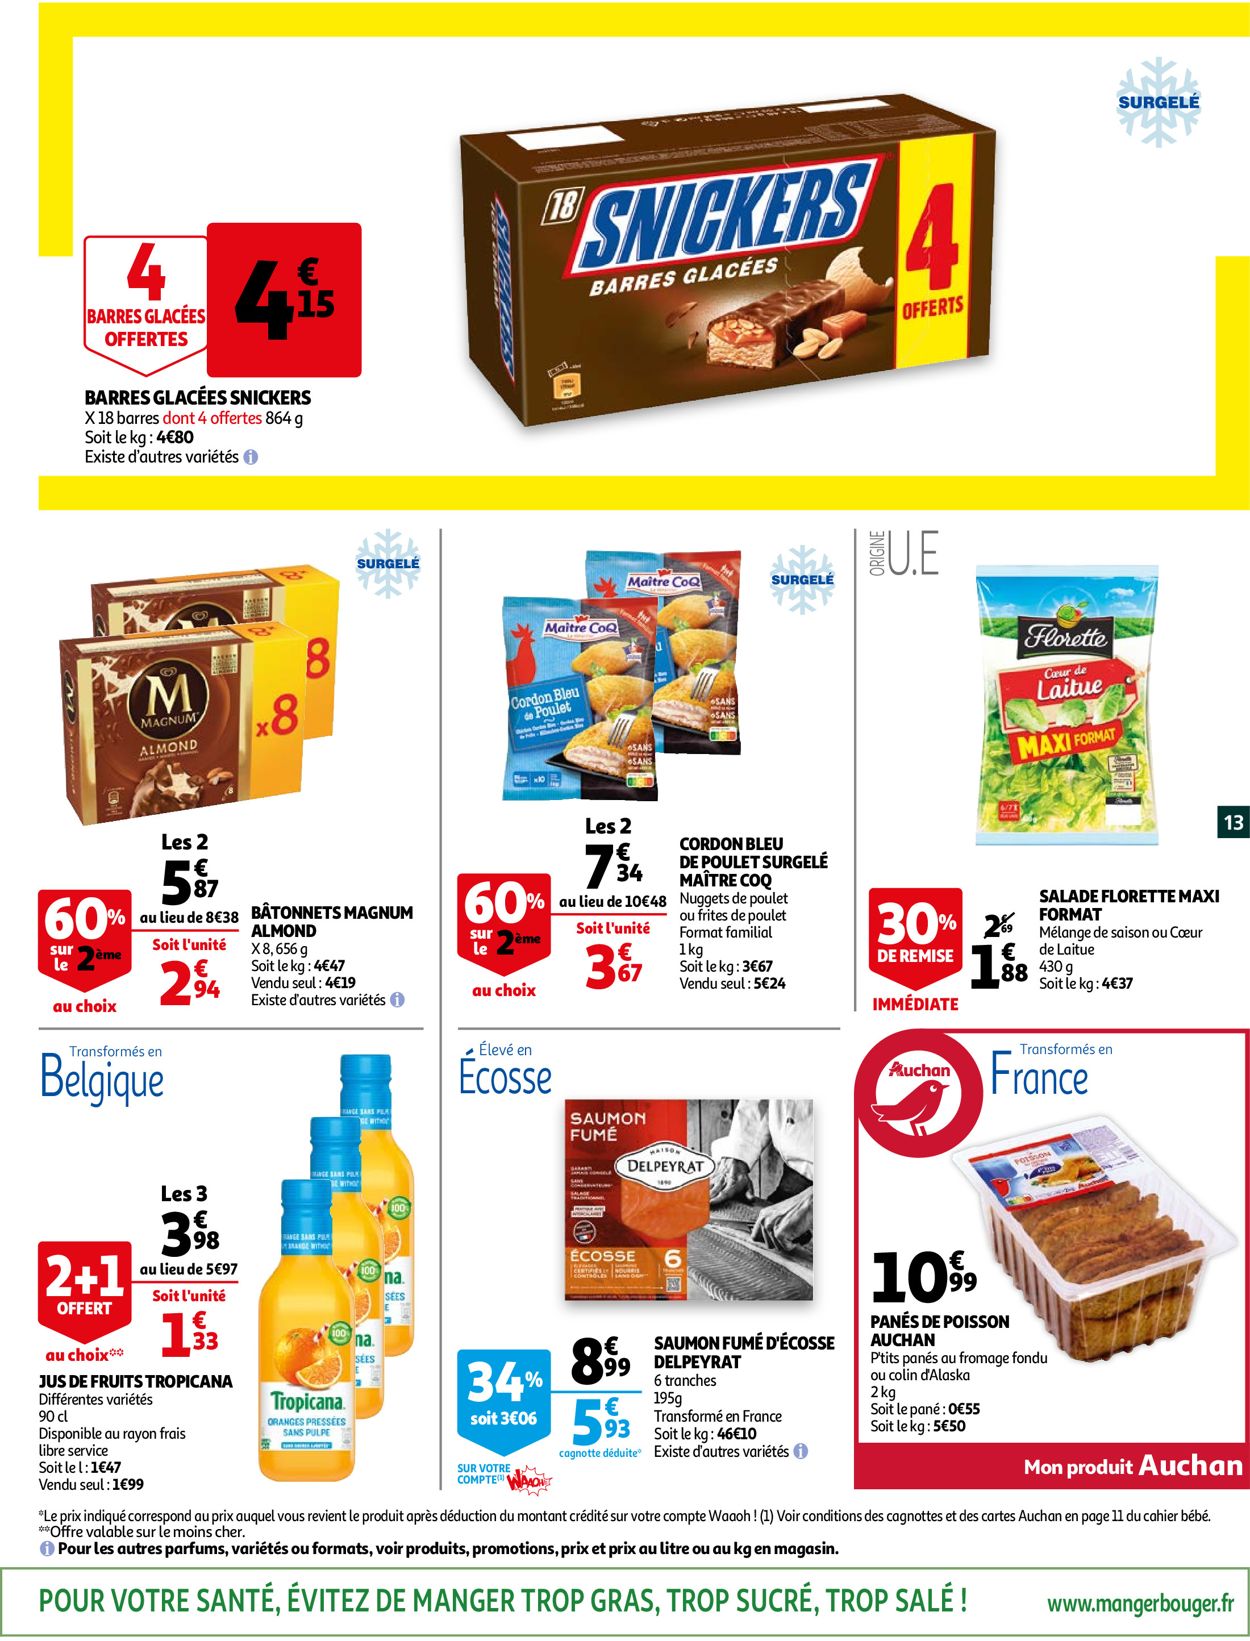 Auchan Catalogue - 03.03-09.03.2021 (Page 13)